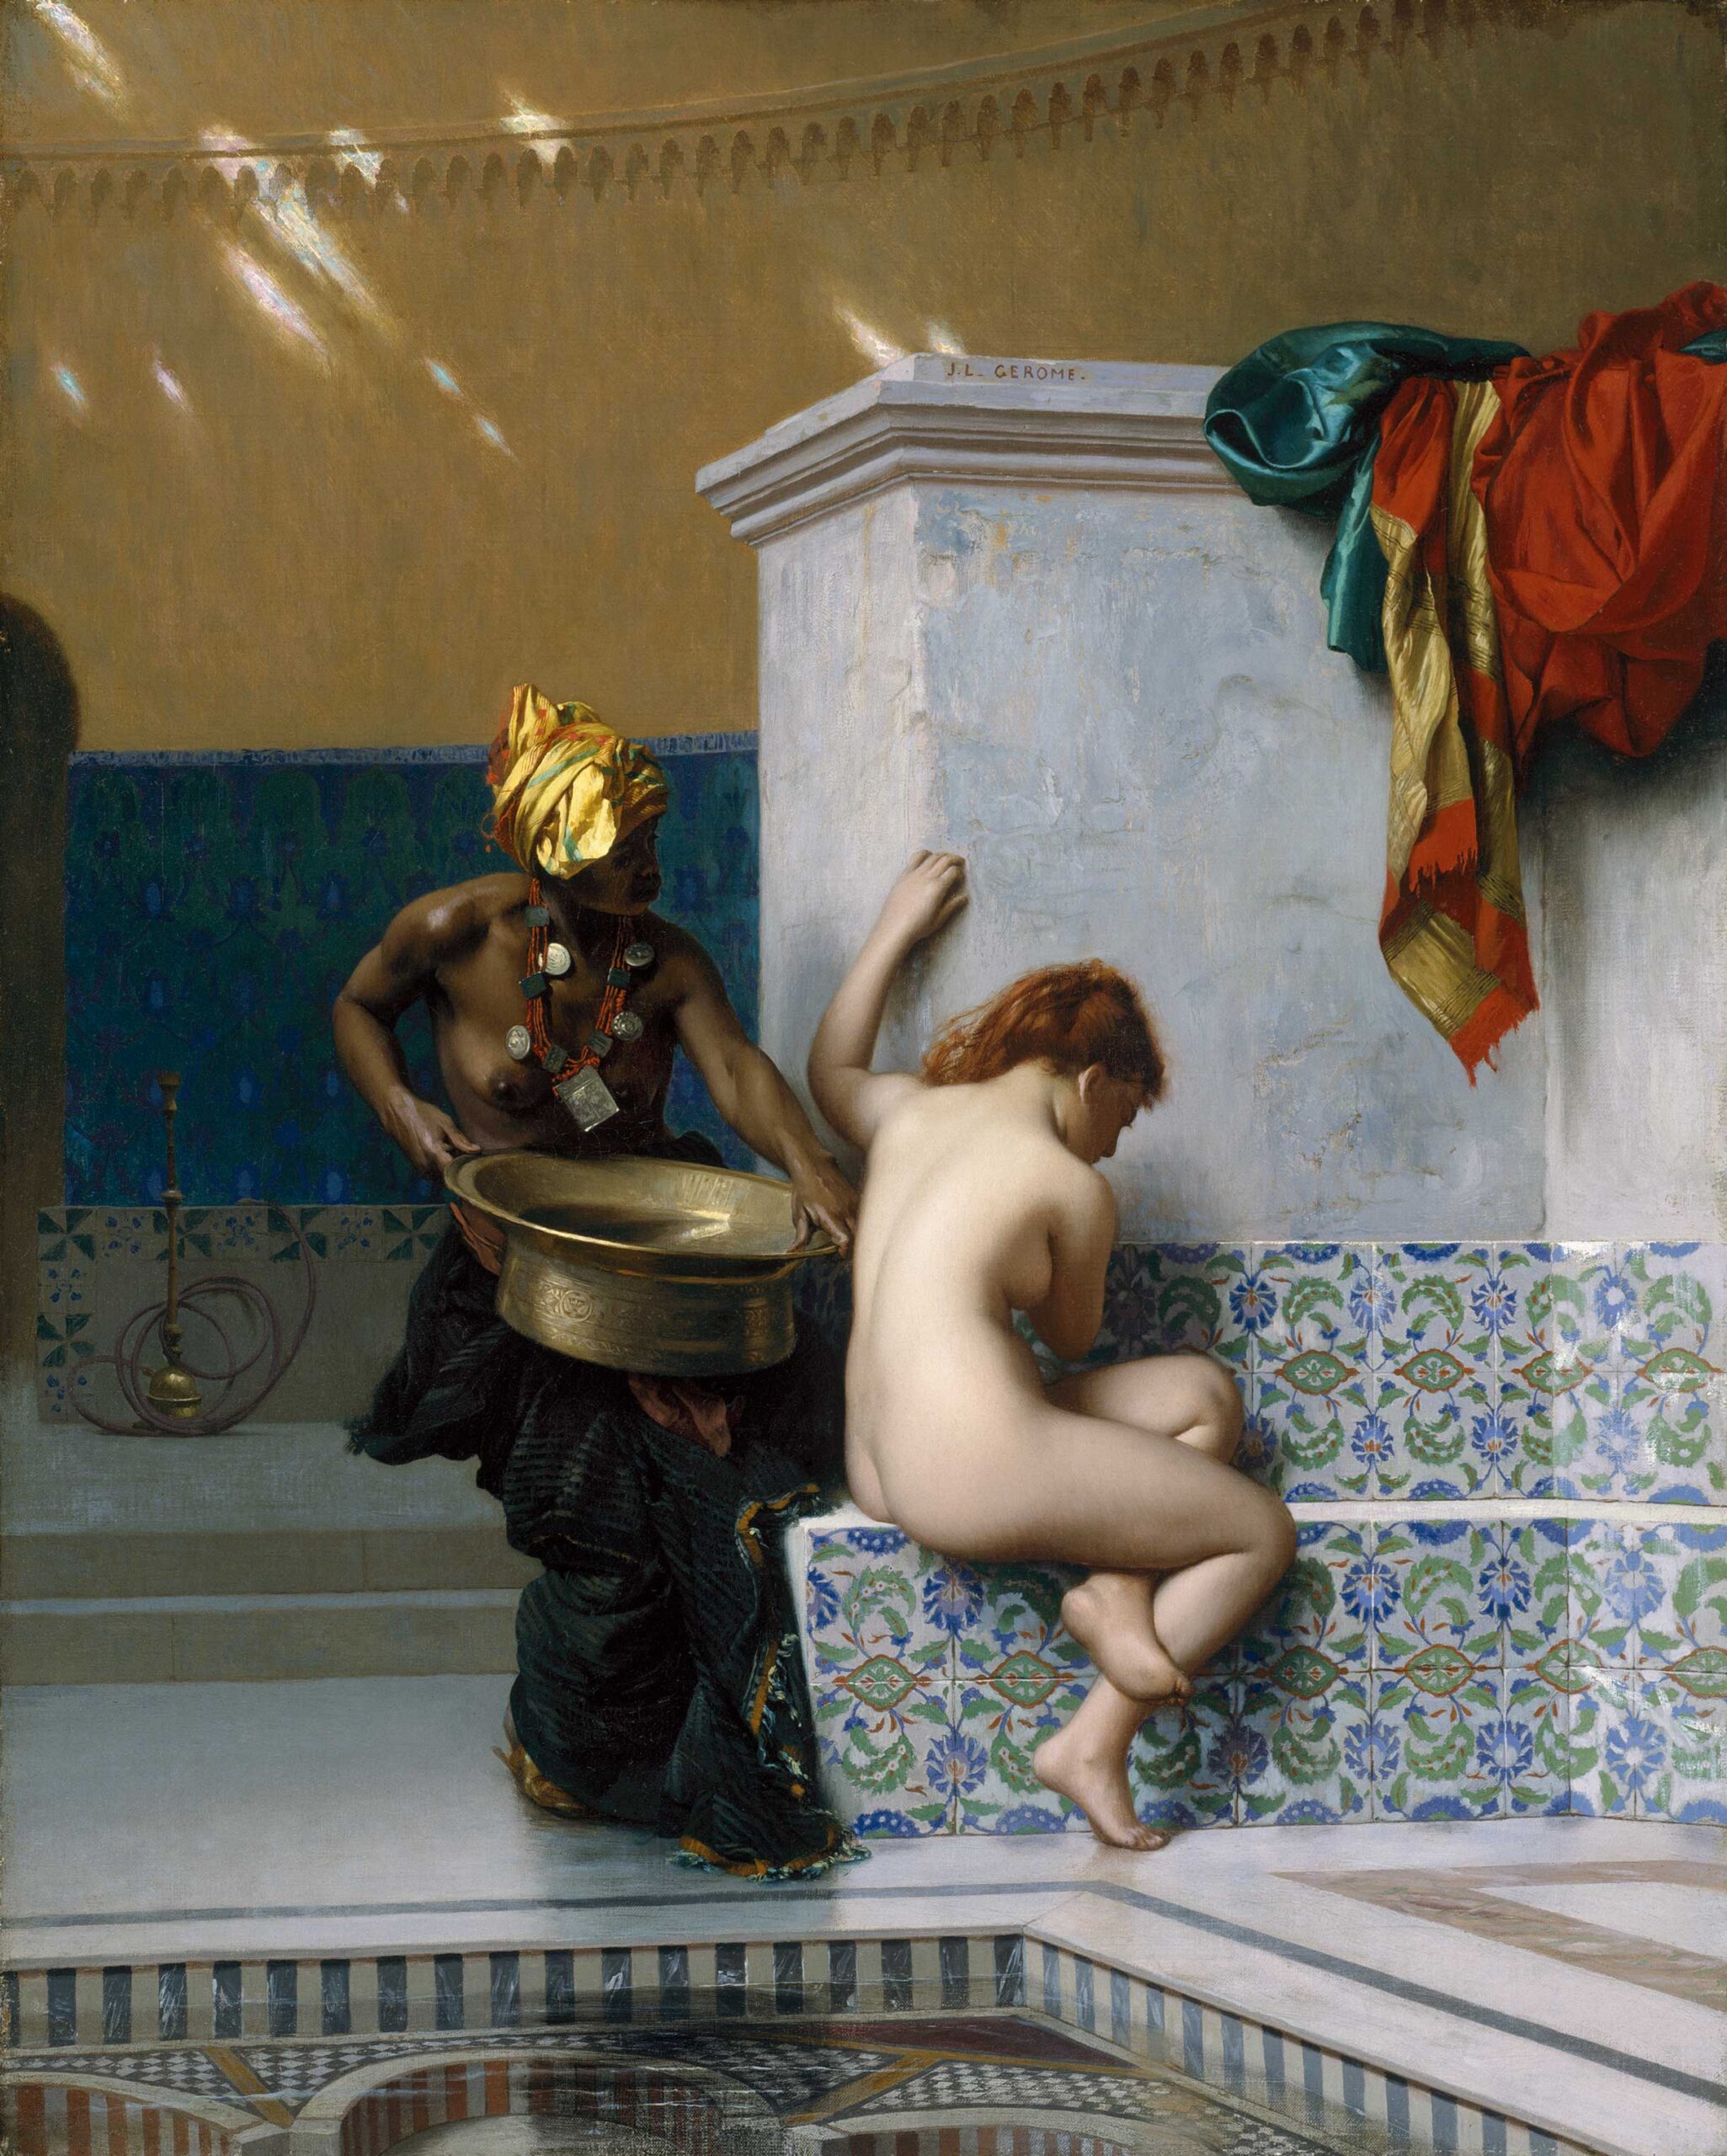 Jean-Léon Gérôme (1824-1904), "Moorish Bath," 1870, oil on canvas, 20 x 16 in., Museum of Fine Arts, Boston, gift of Robert Jordan from the collection of Eben D. Jordan, 24.217